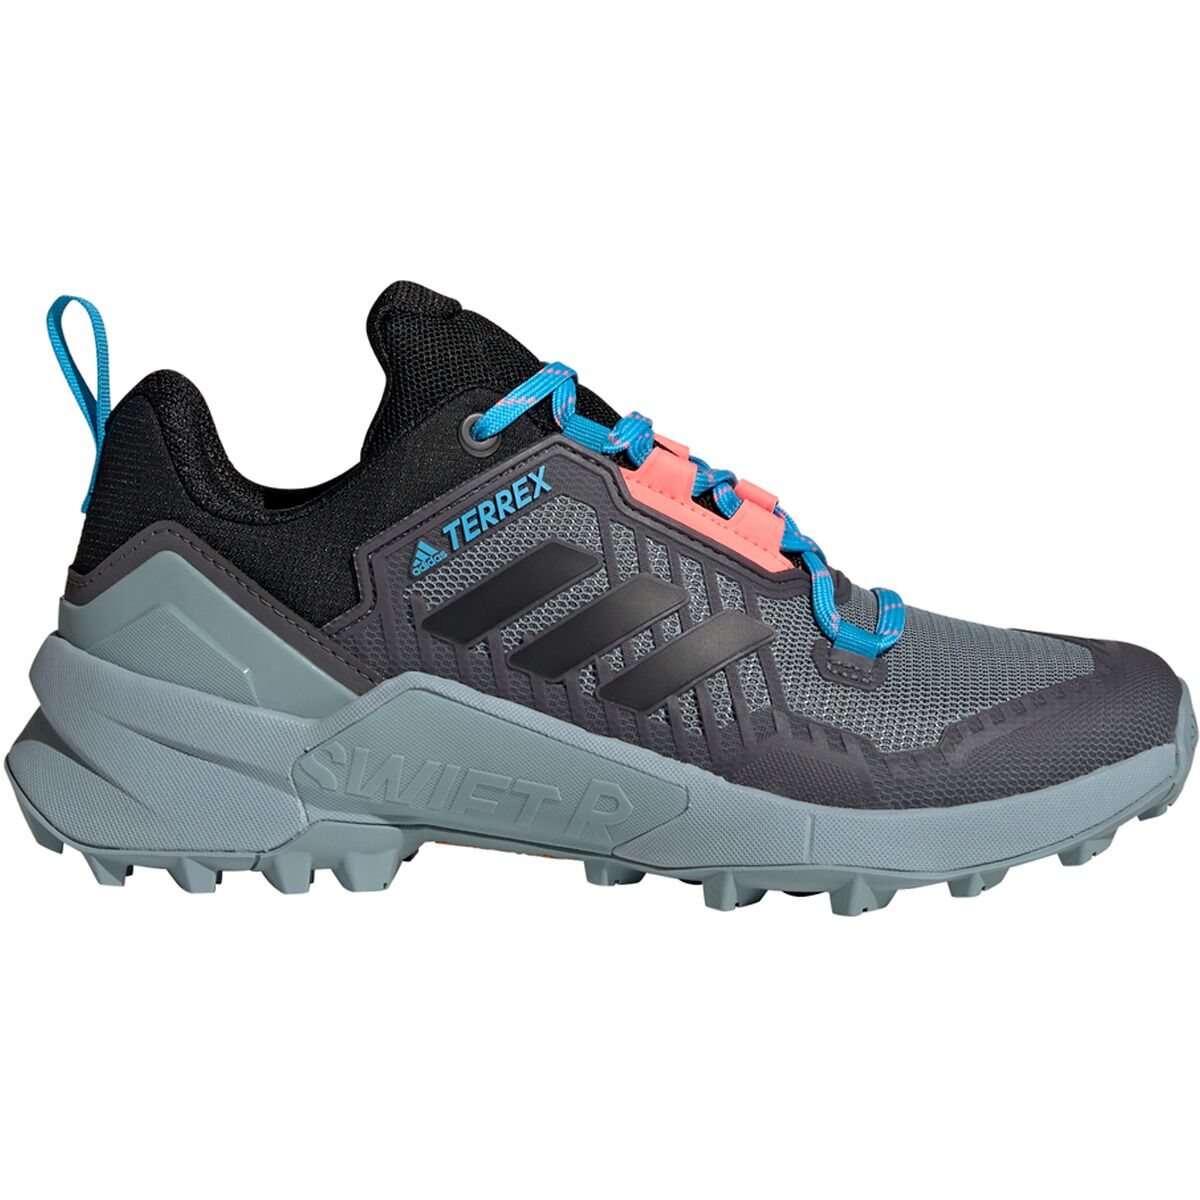 Adidas Outdoor Terrex Swift R3 Hiking Shoe - Women's